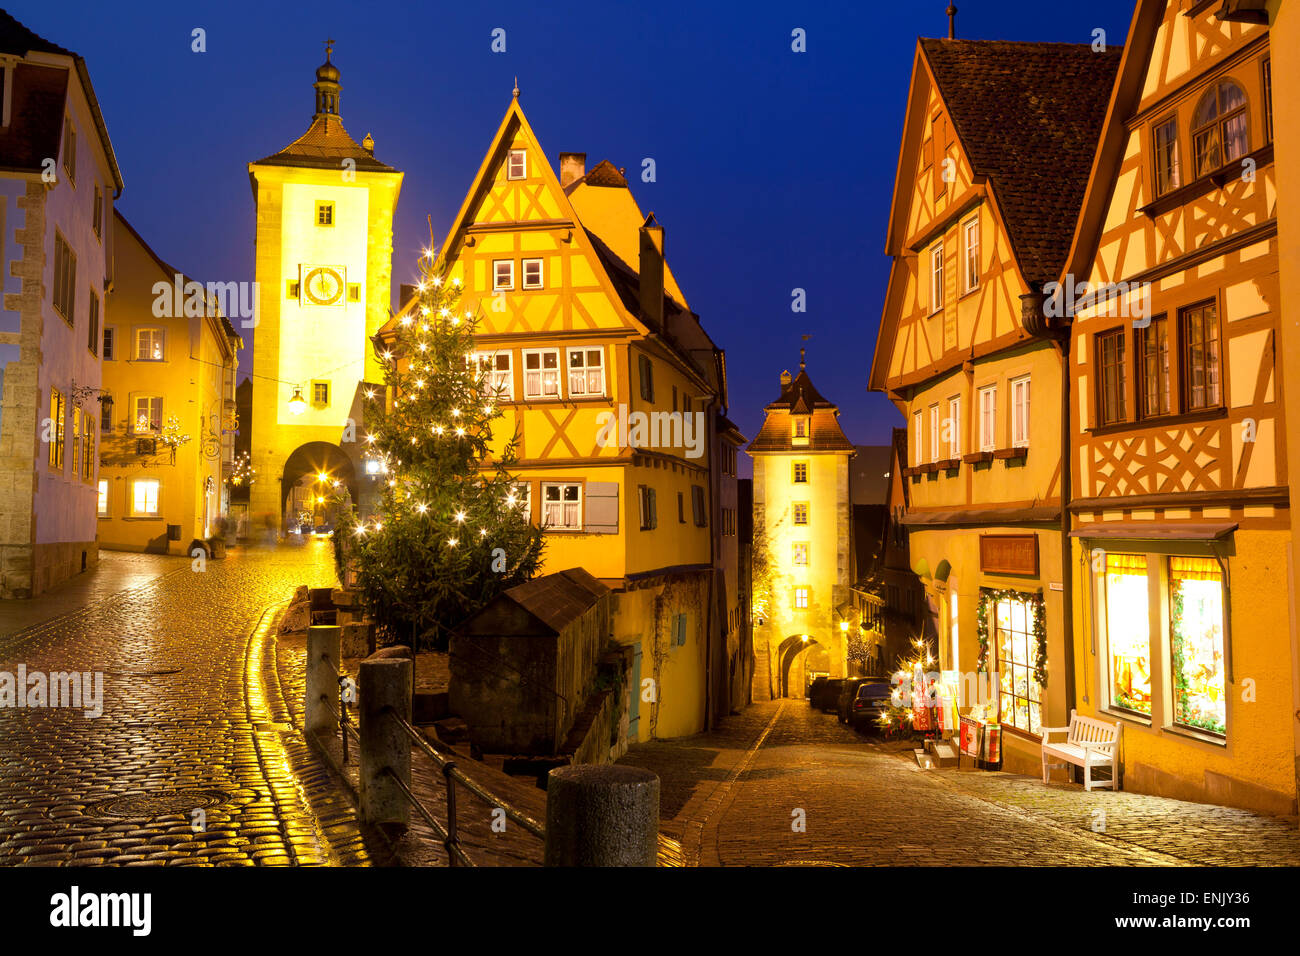 Christmas Tree at the Plonlein, Rothenburg ob der Tauber, Bavaria, Germany, Europe Stock Photo